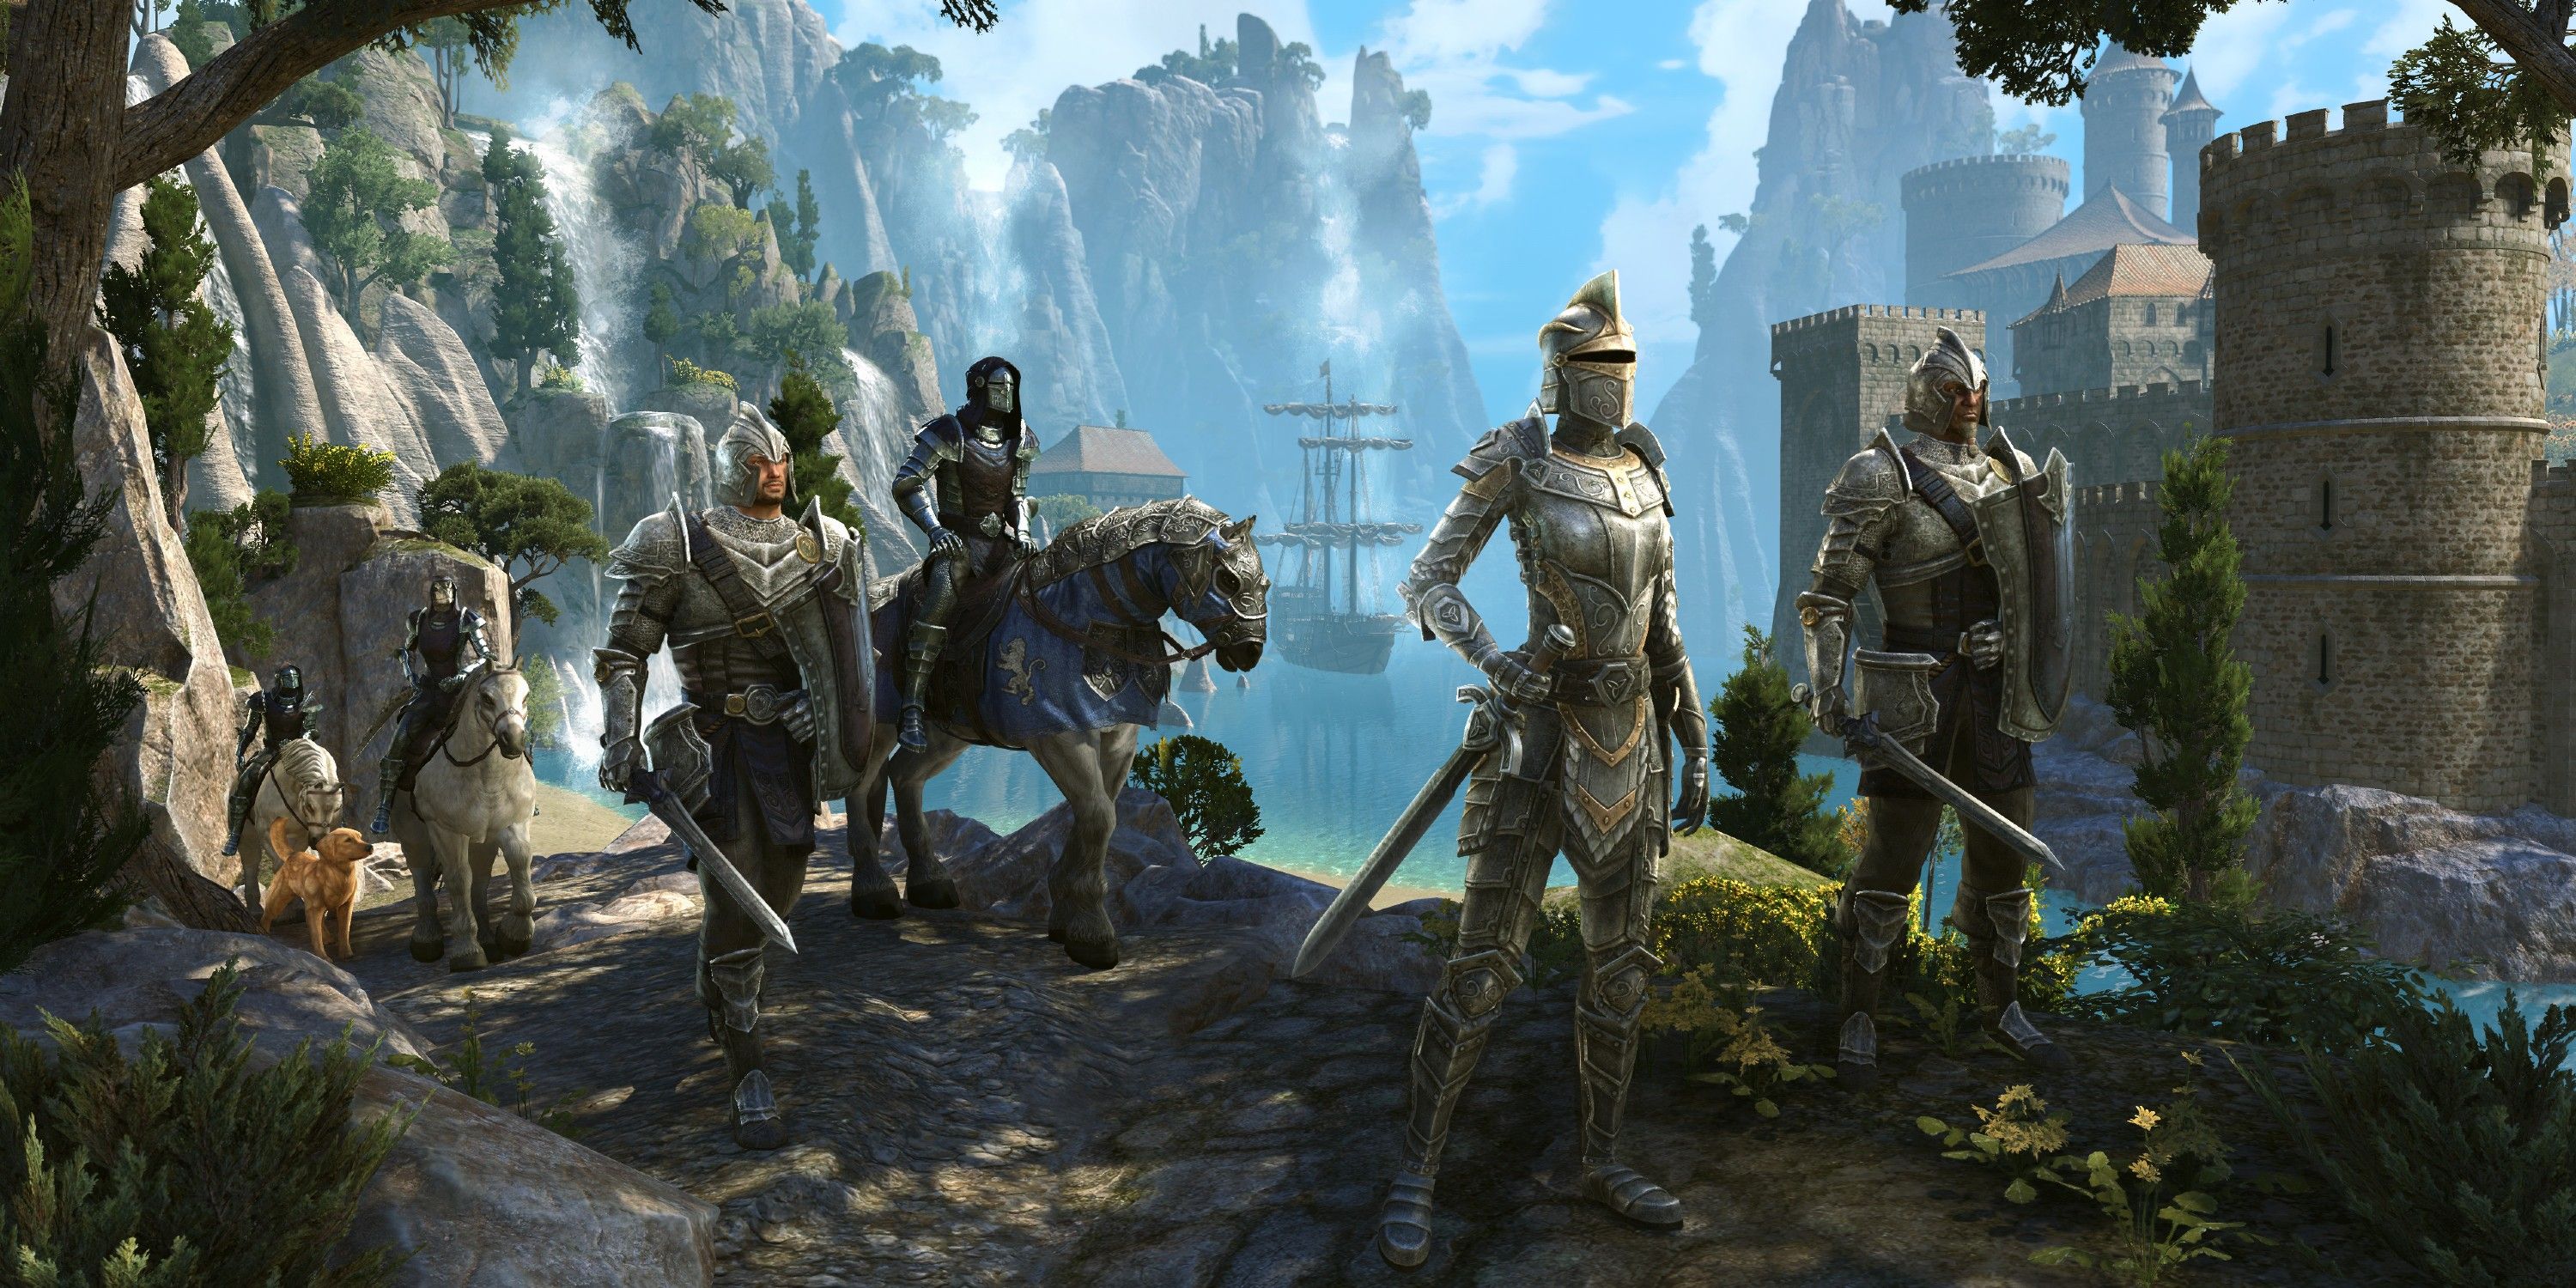 A party adventures through High Isle in Elder Scrolls Online